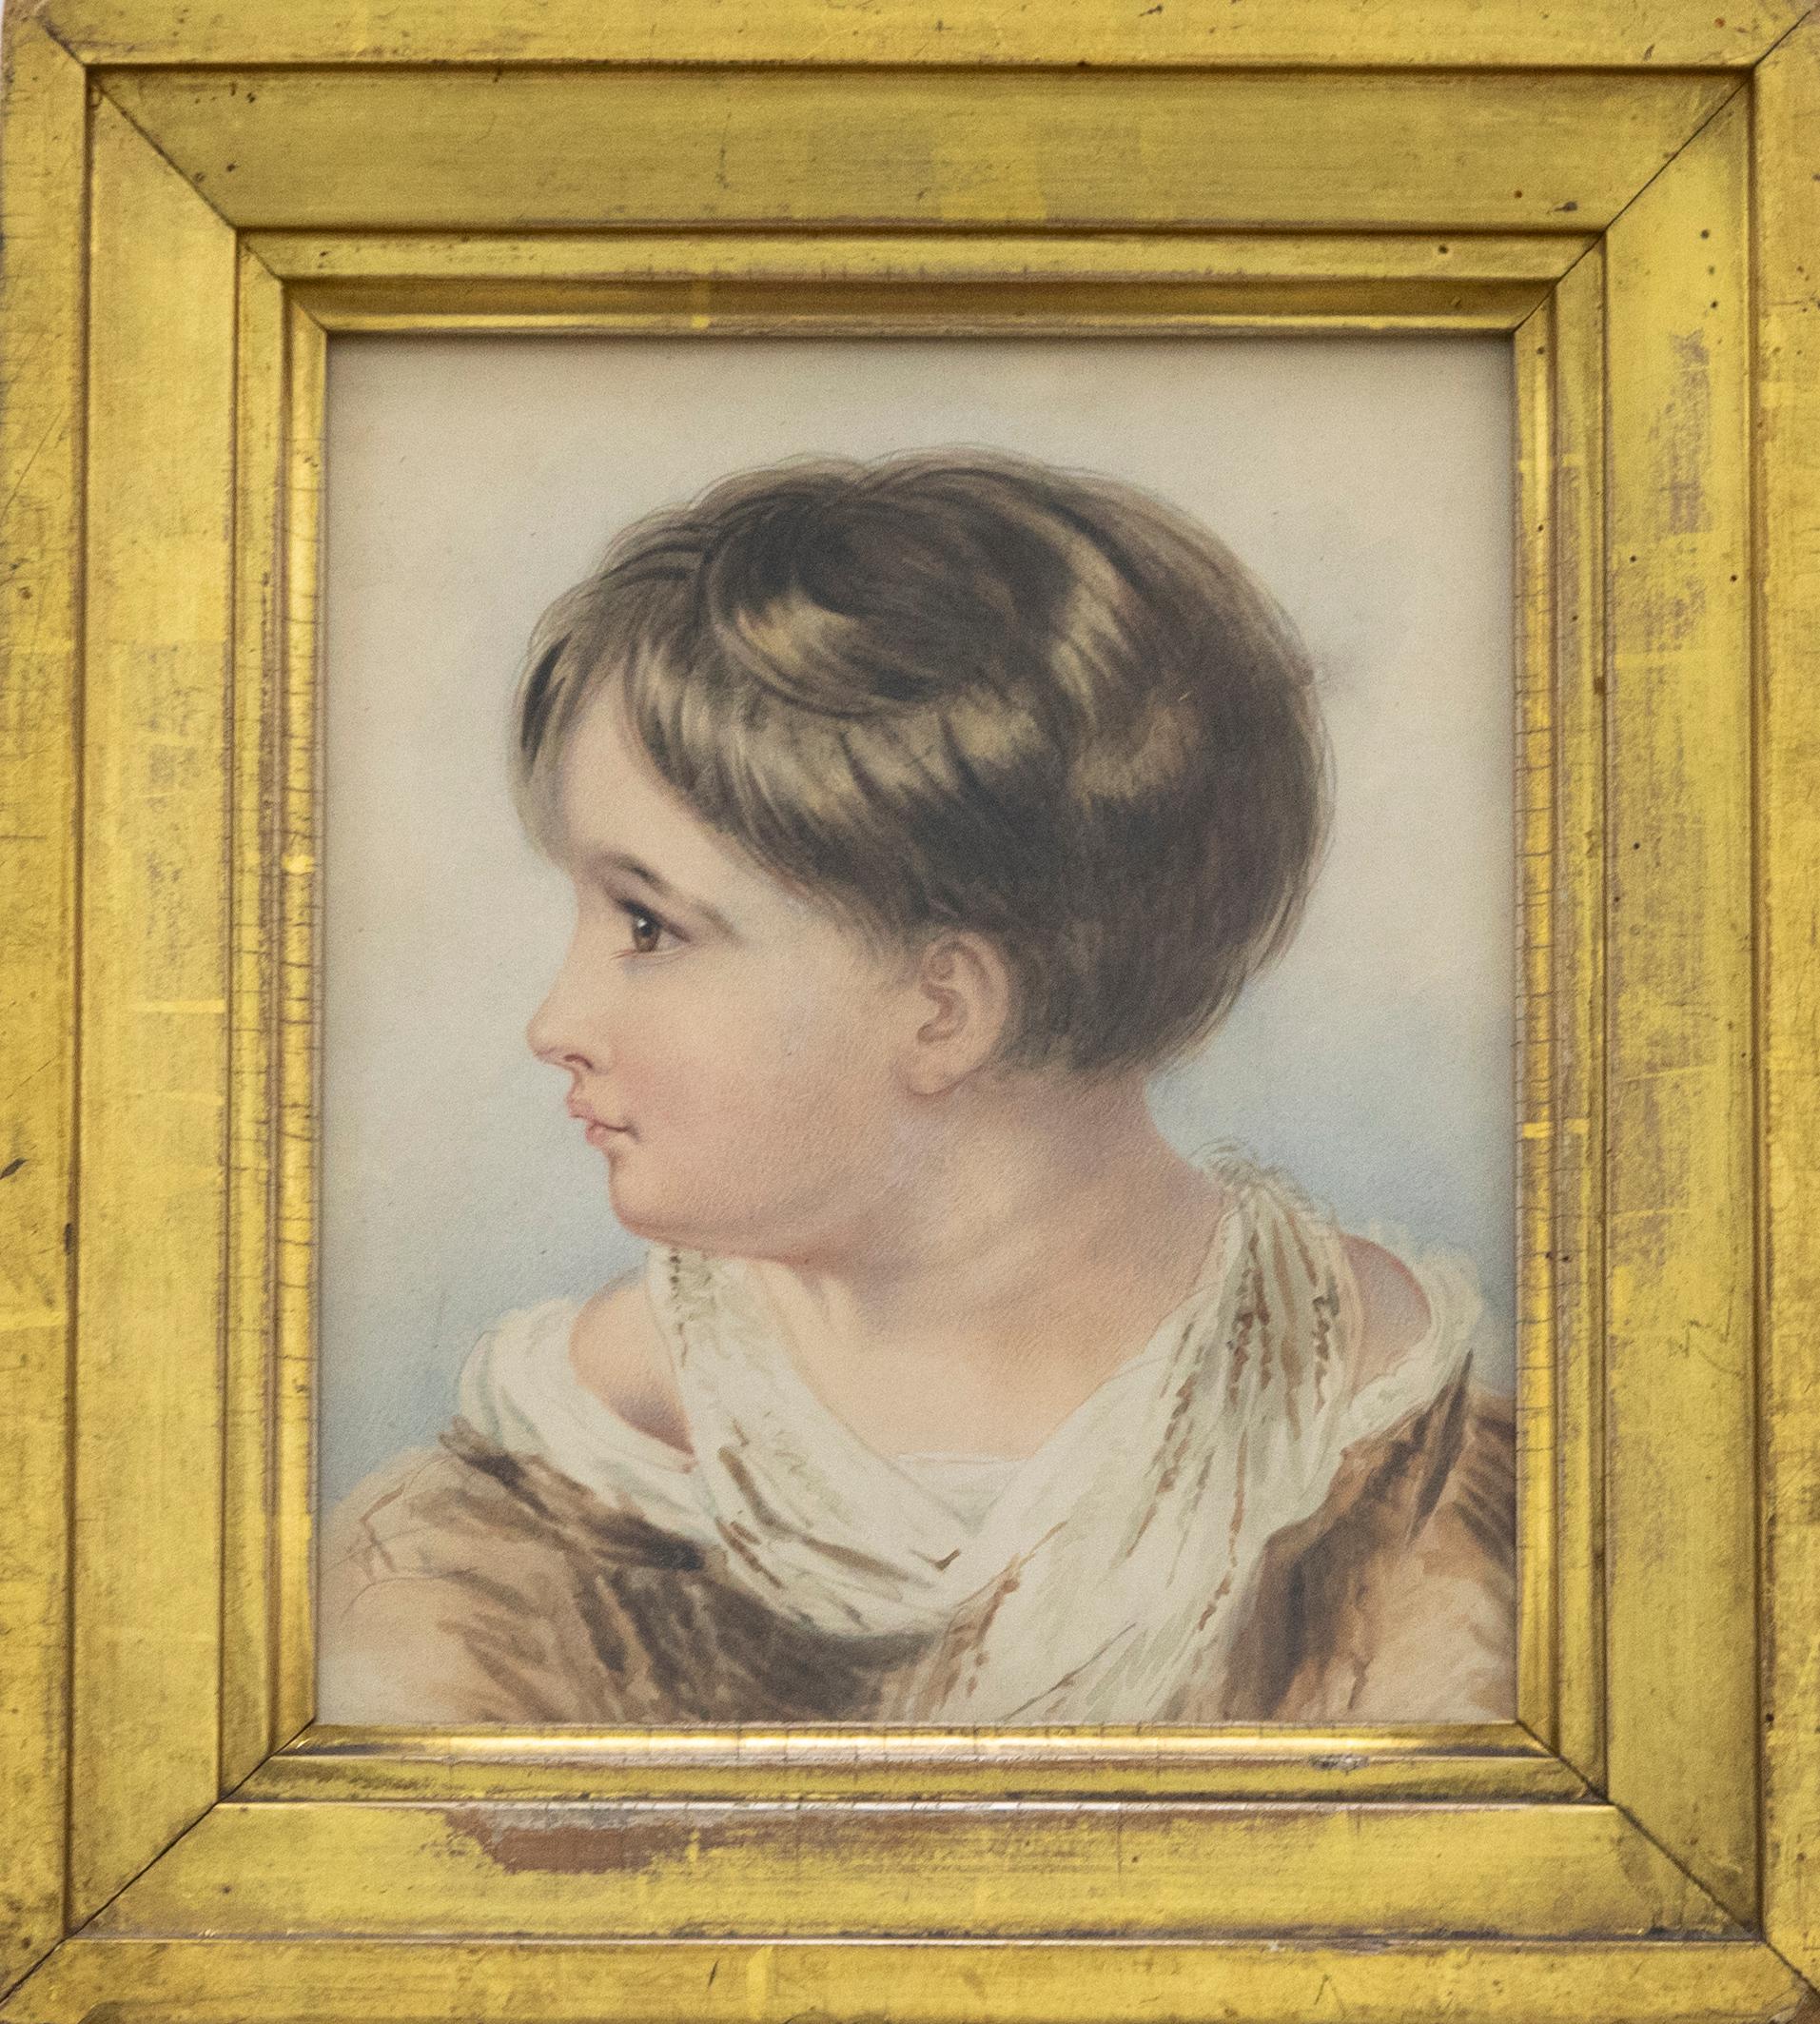 Unknown Portrait - Mid 19th Century Watercolour - The Angelic Child